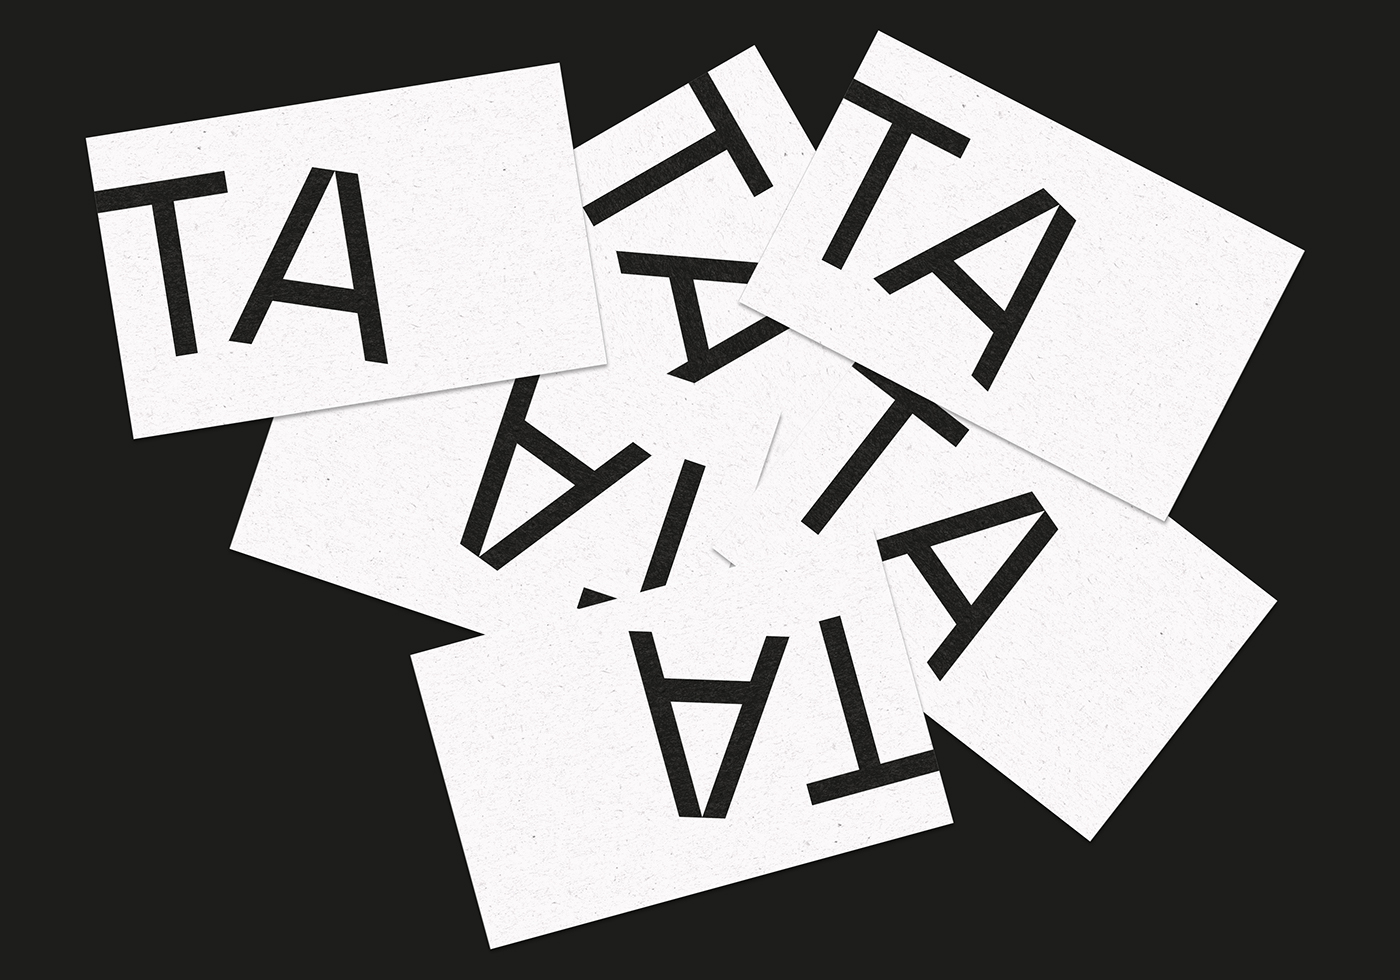 Tadao Ando architecture branding  identity Website card logo typography   design